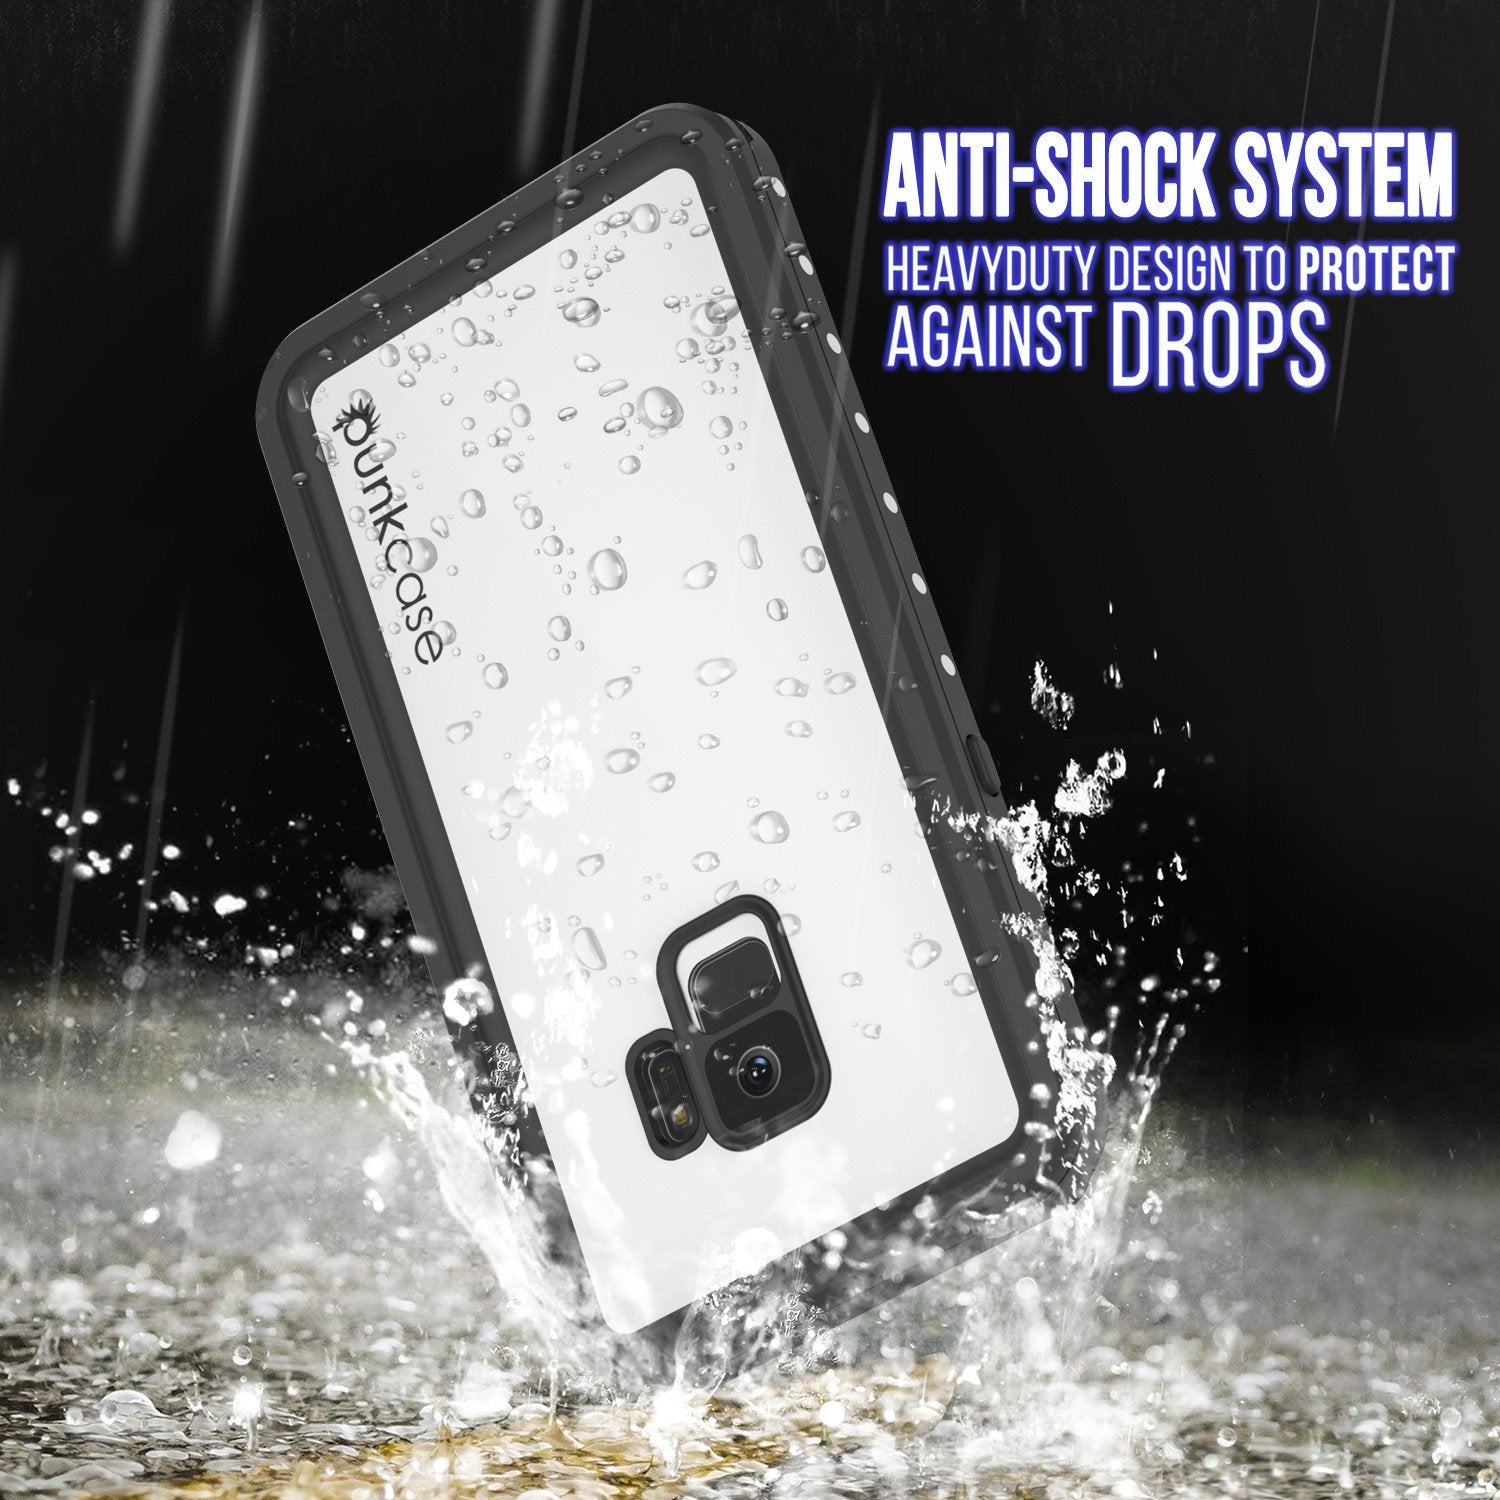 Galaxy S9 Waterproof Case, Punkcase StudStar White Thin 6.6ft Underwater IP68 Shock/Snow Proof